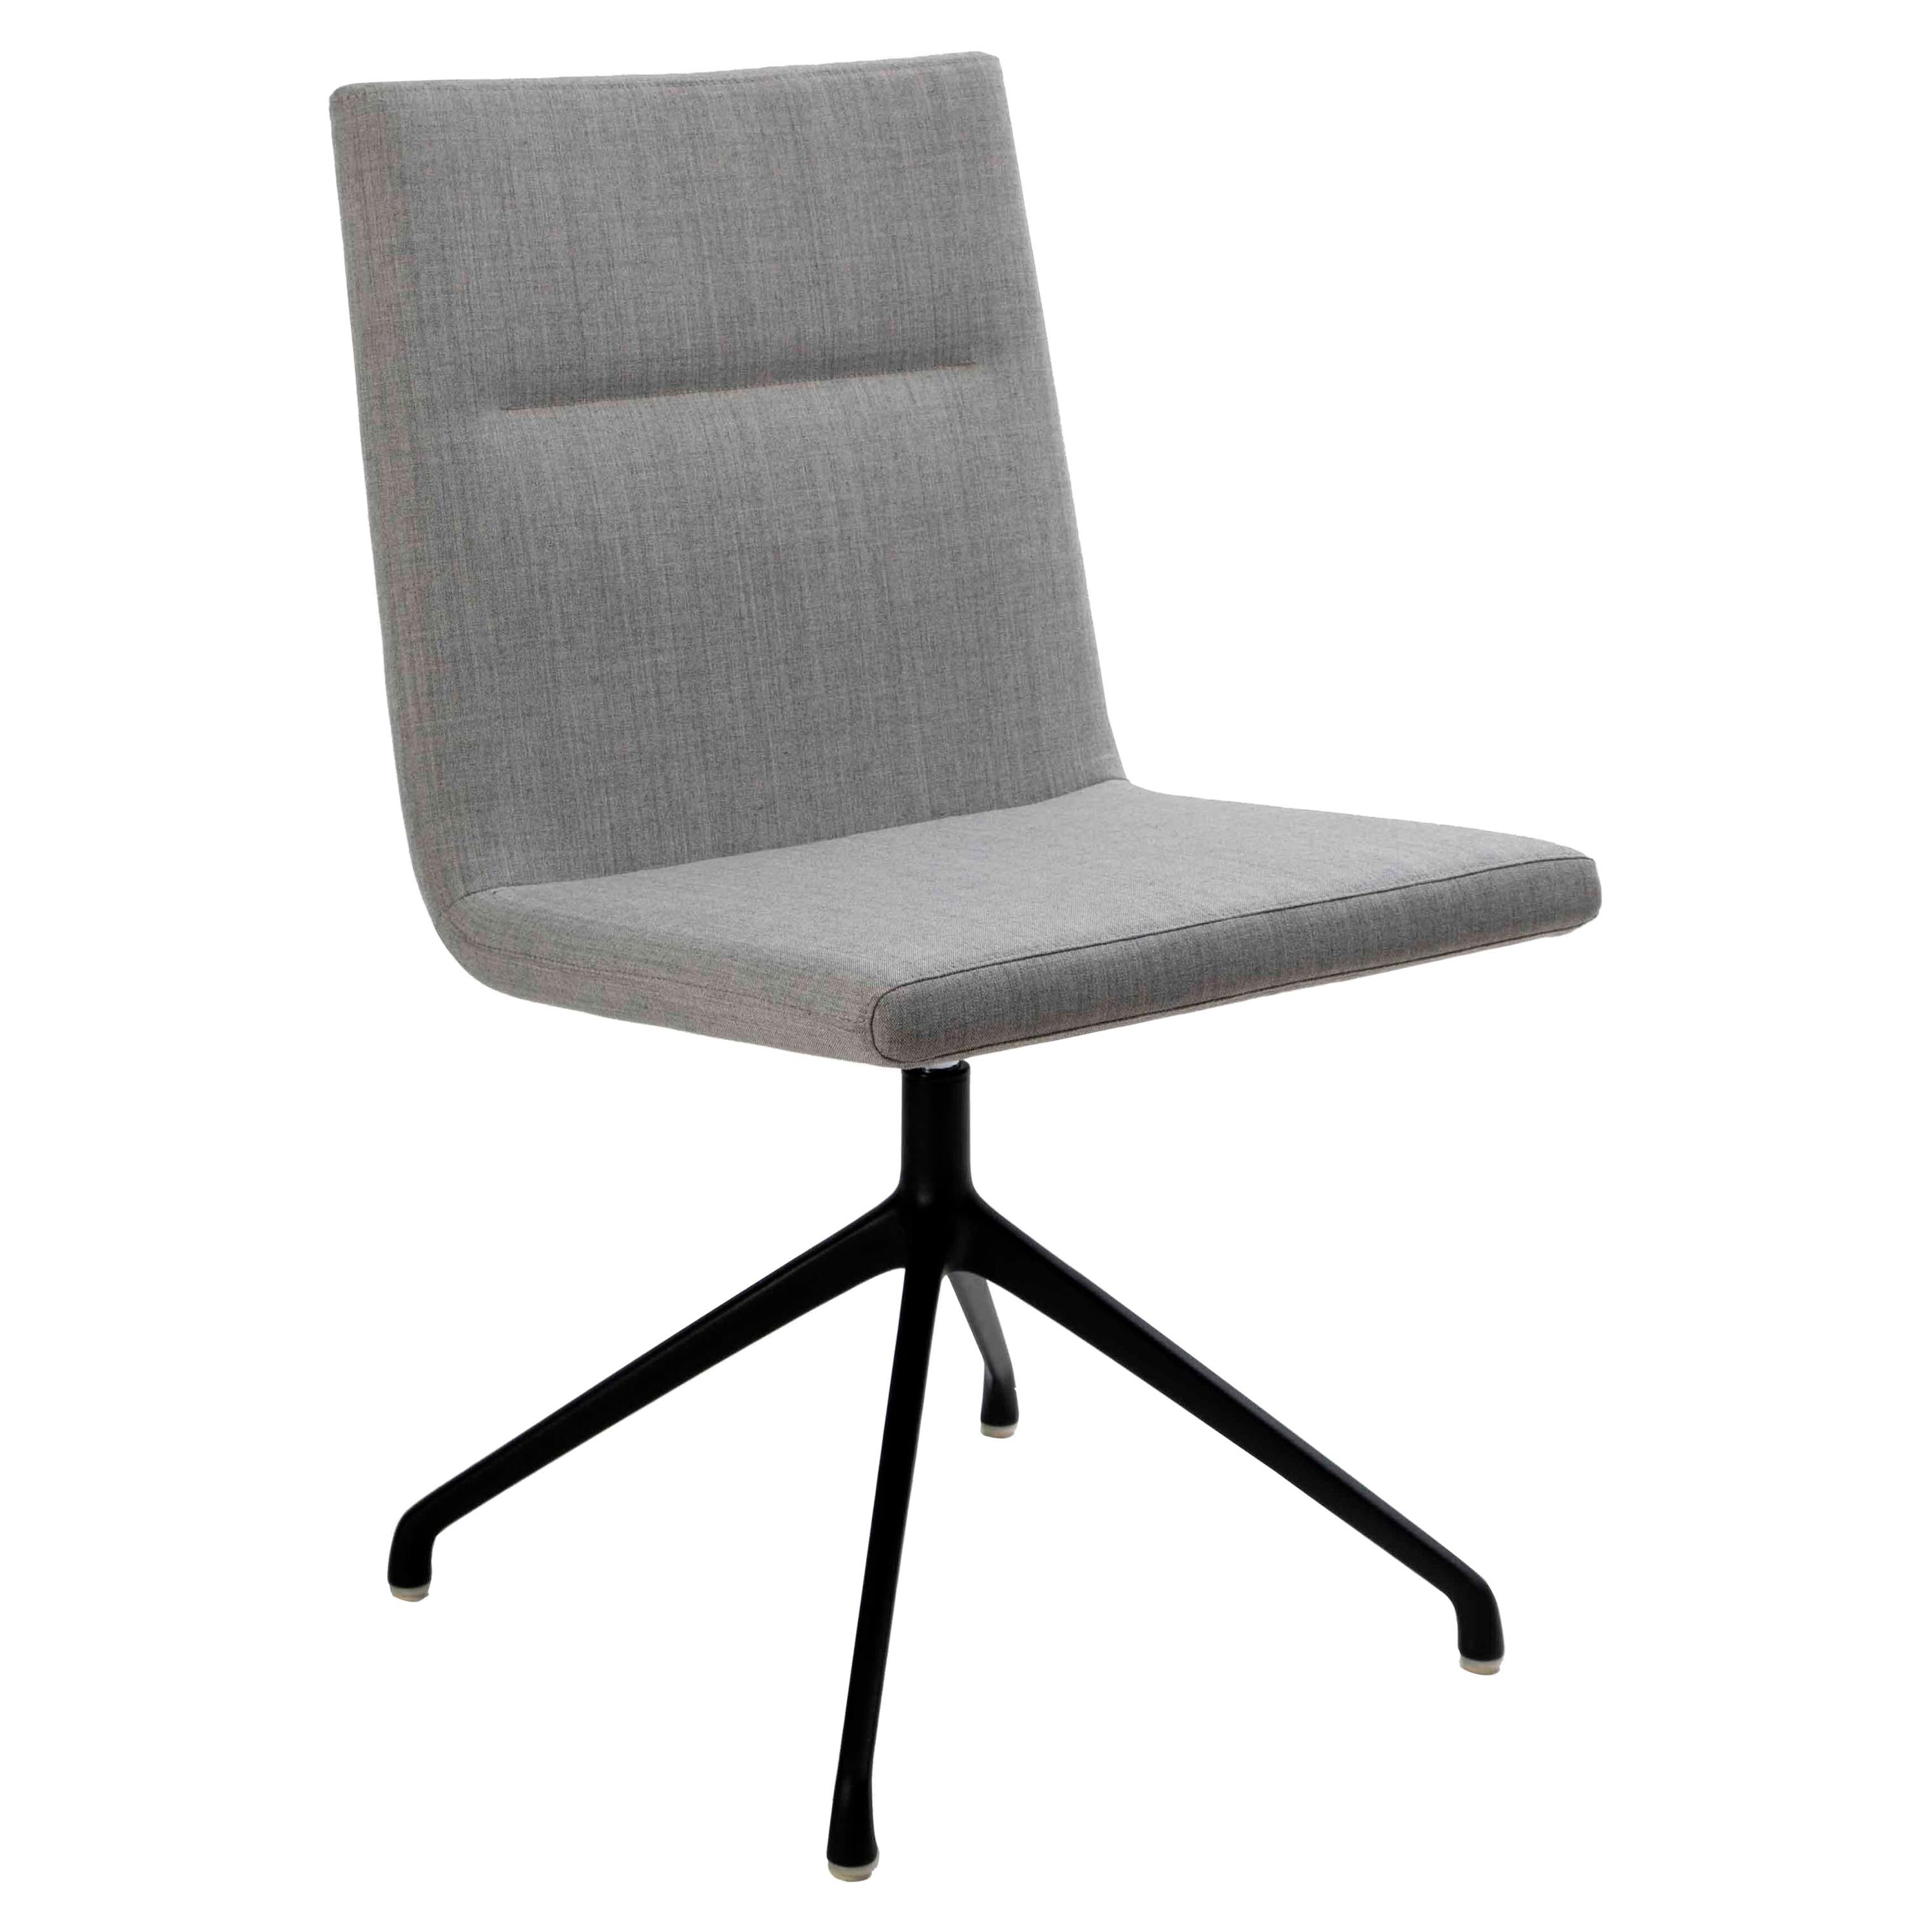 Inno Basso M YA Swivel Chair Designed by Harri Korhonen